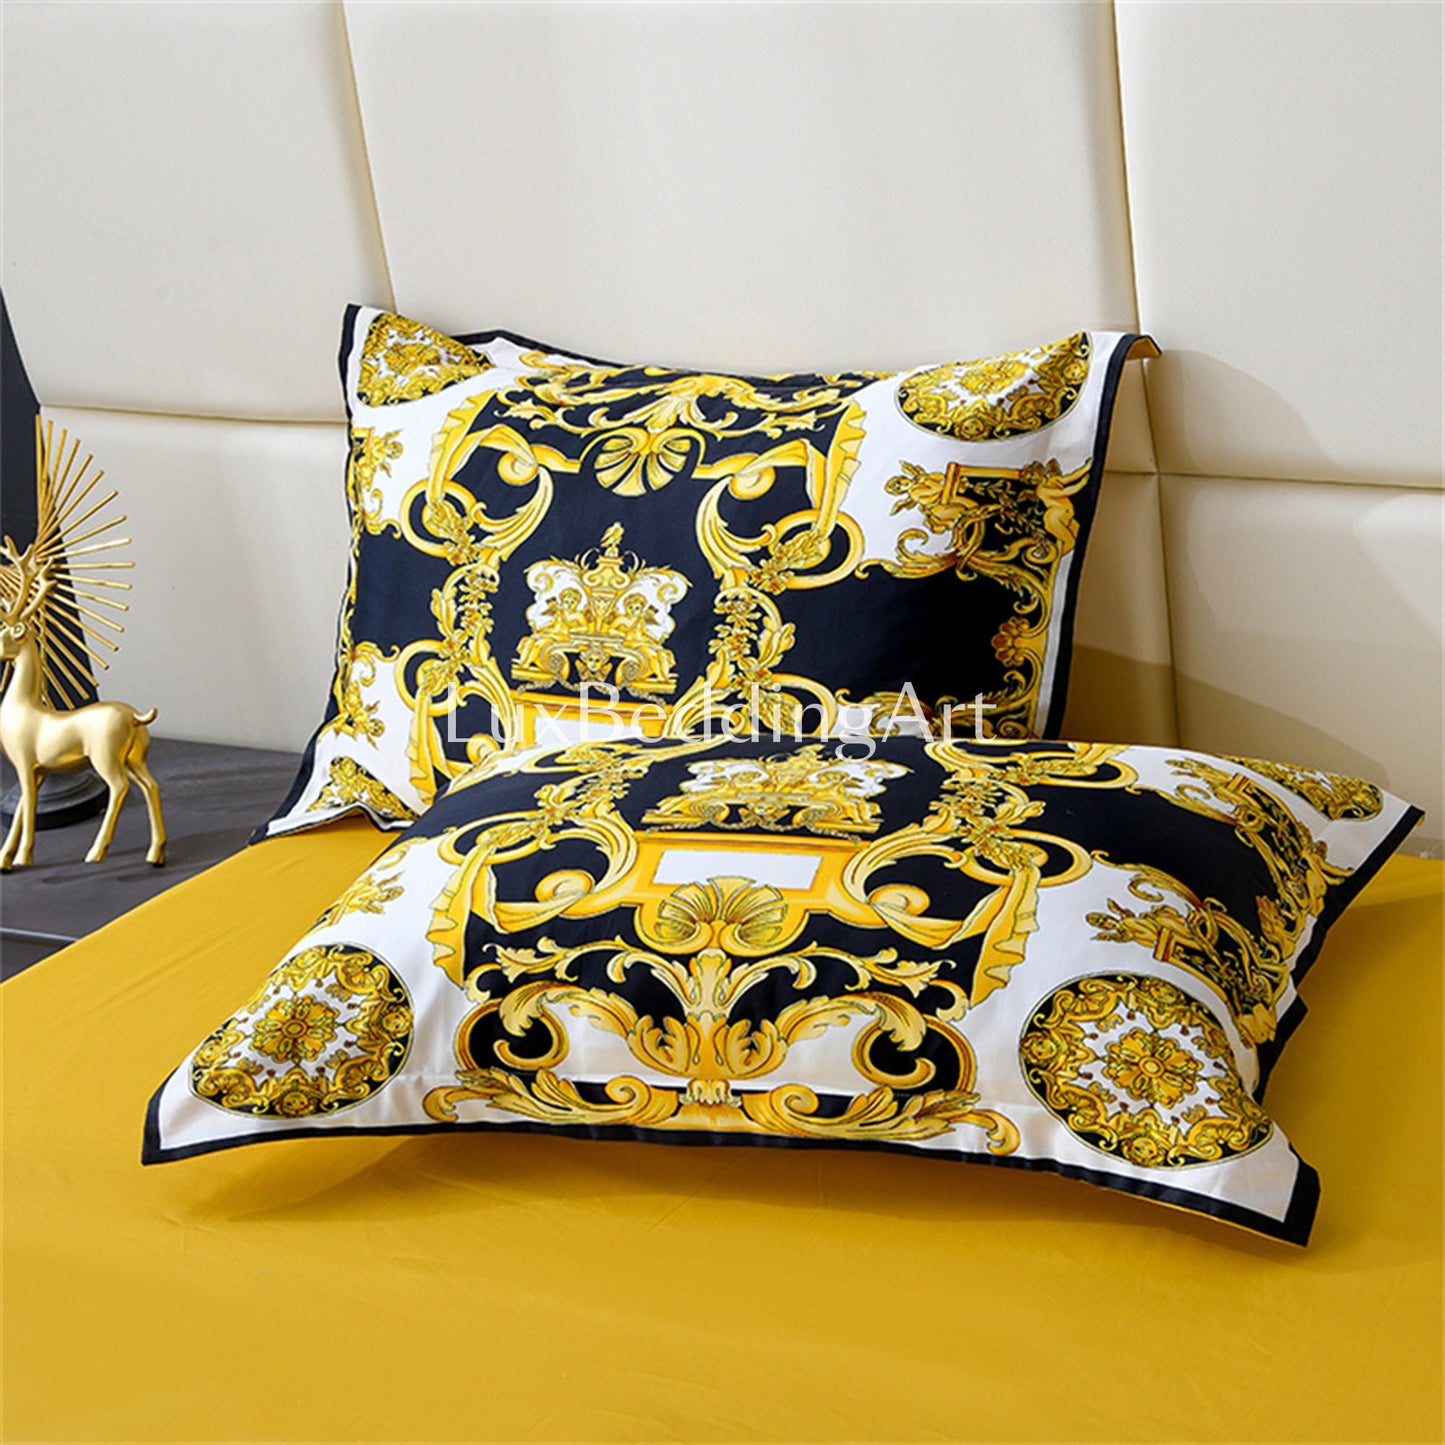 Luxury Elegant Egyptian Cotton Baroque design Silky Soft Bedding Set • Duvet Cover Set • Bed Sheet • Pillowcases